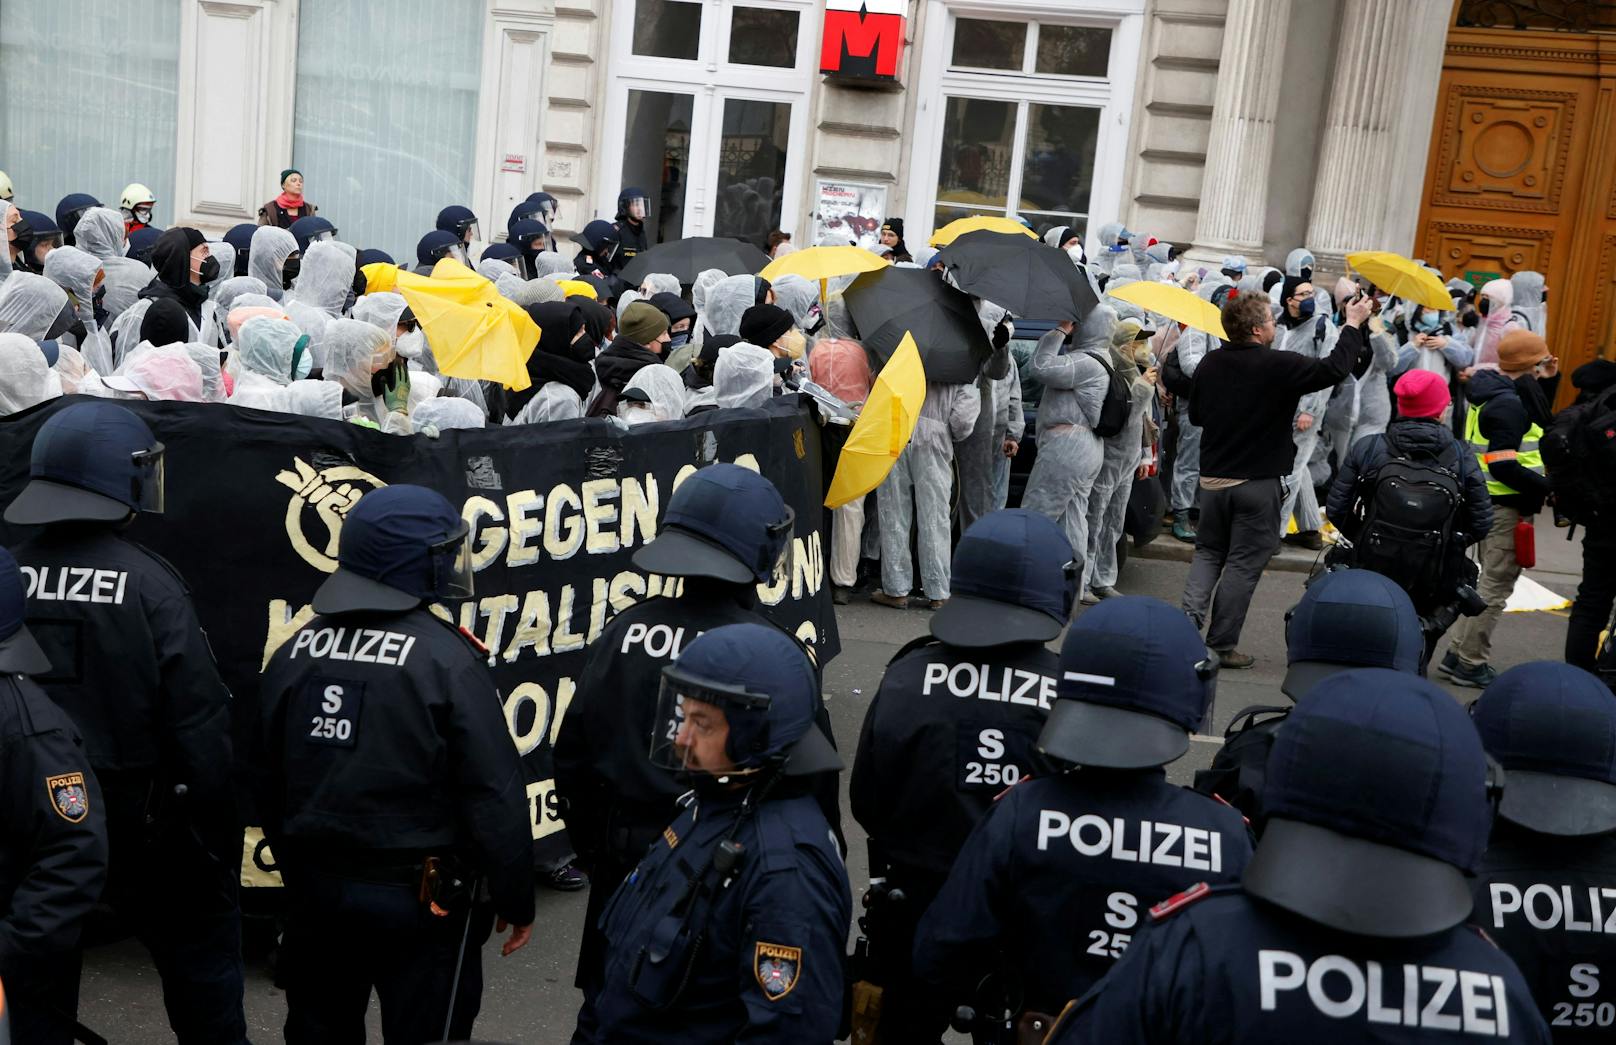 143 Festnahmen! Polizei zieht nach Demo-Chaos Bilanz